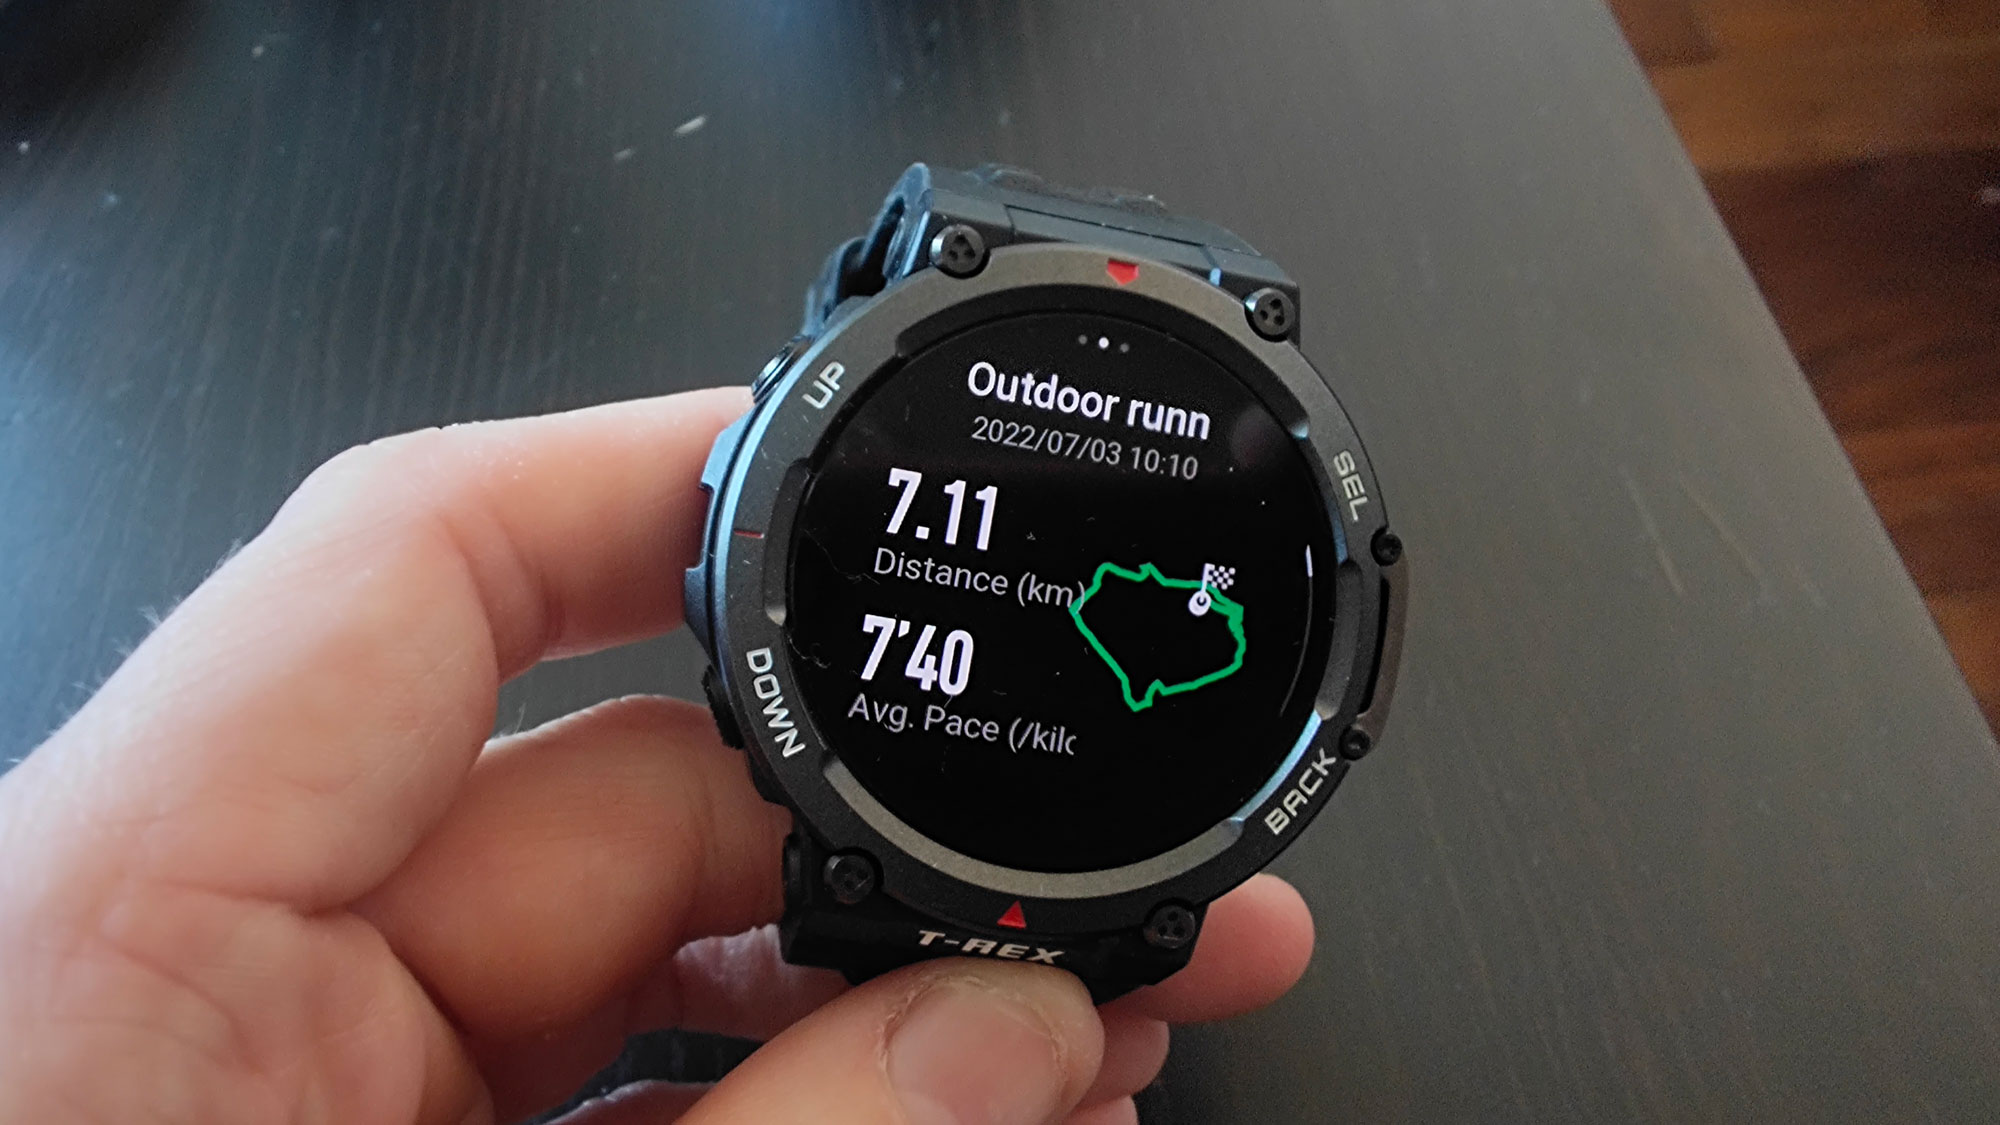  Amazfit T-Rex Ultra Smart Watch for Men, 20-Day